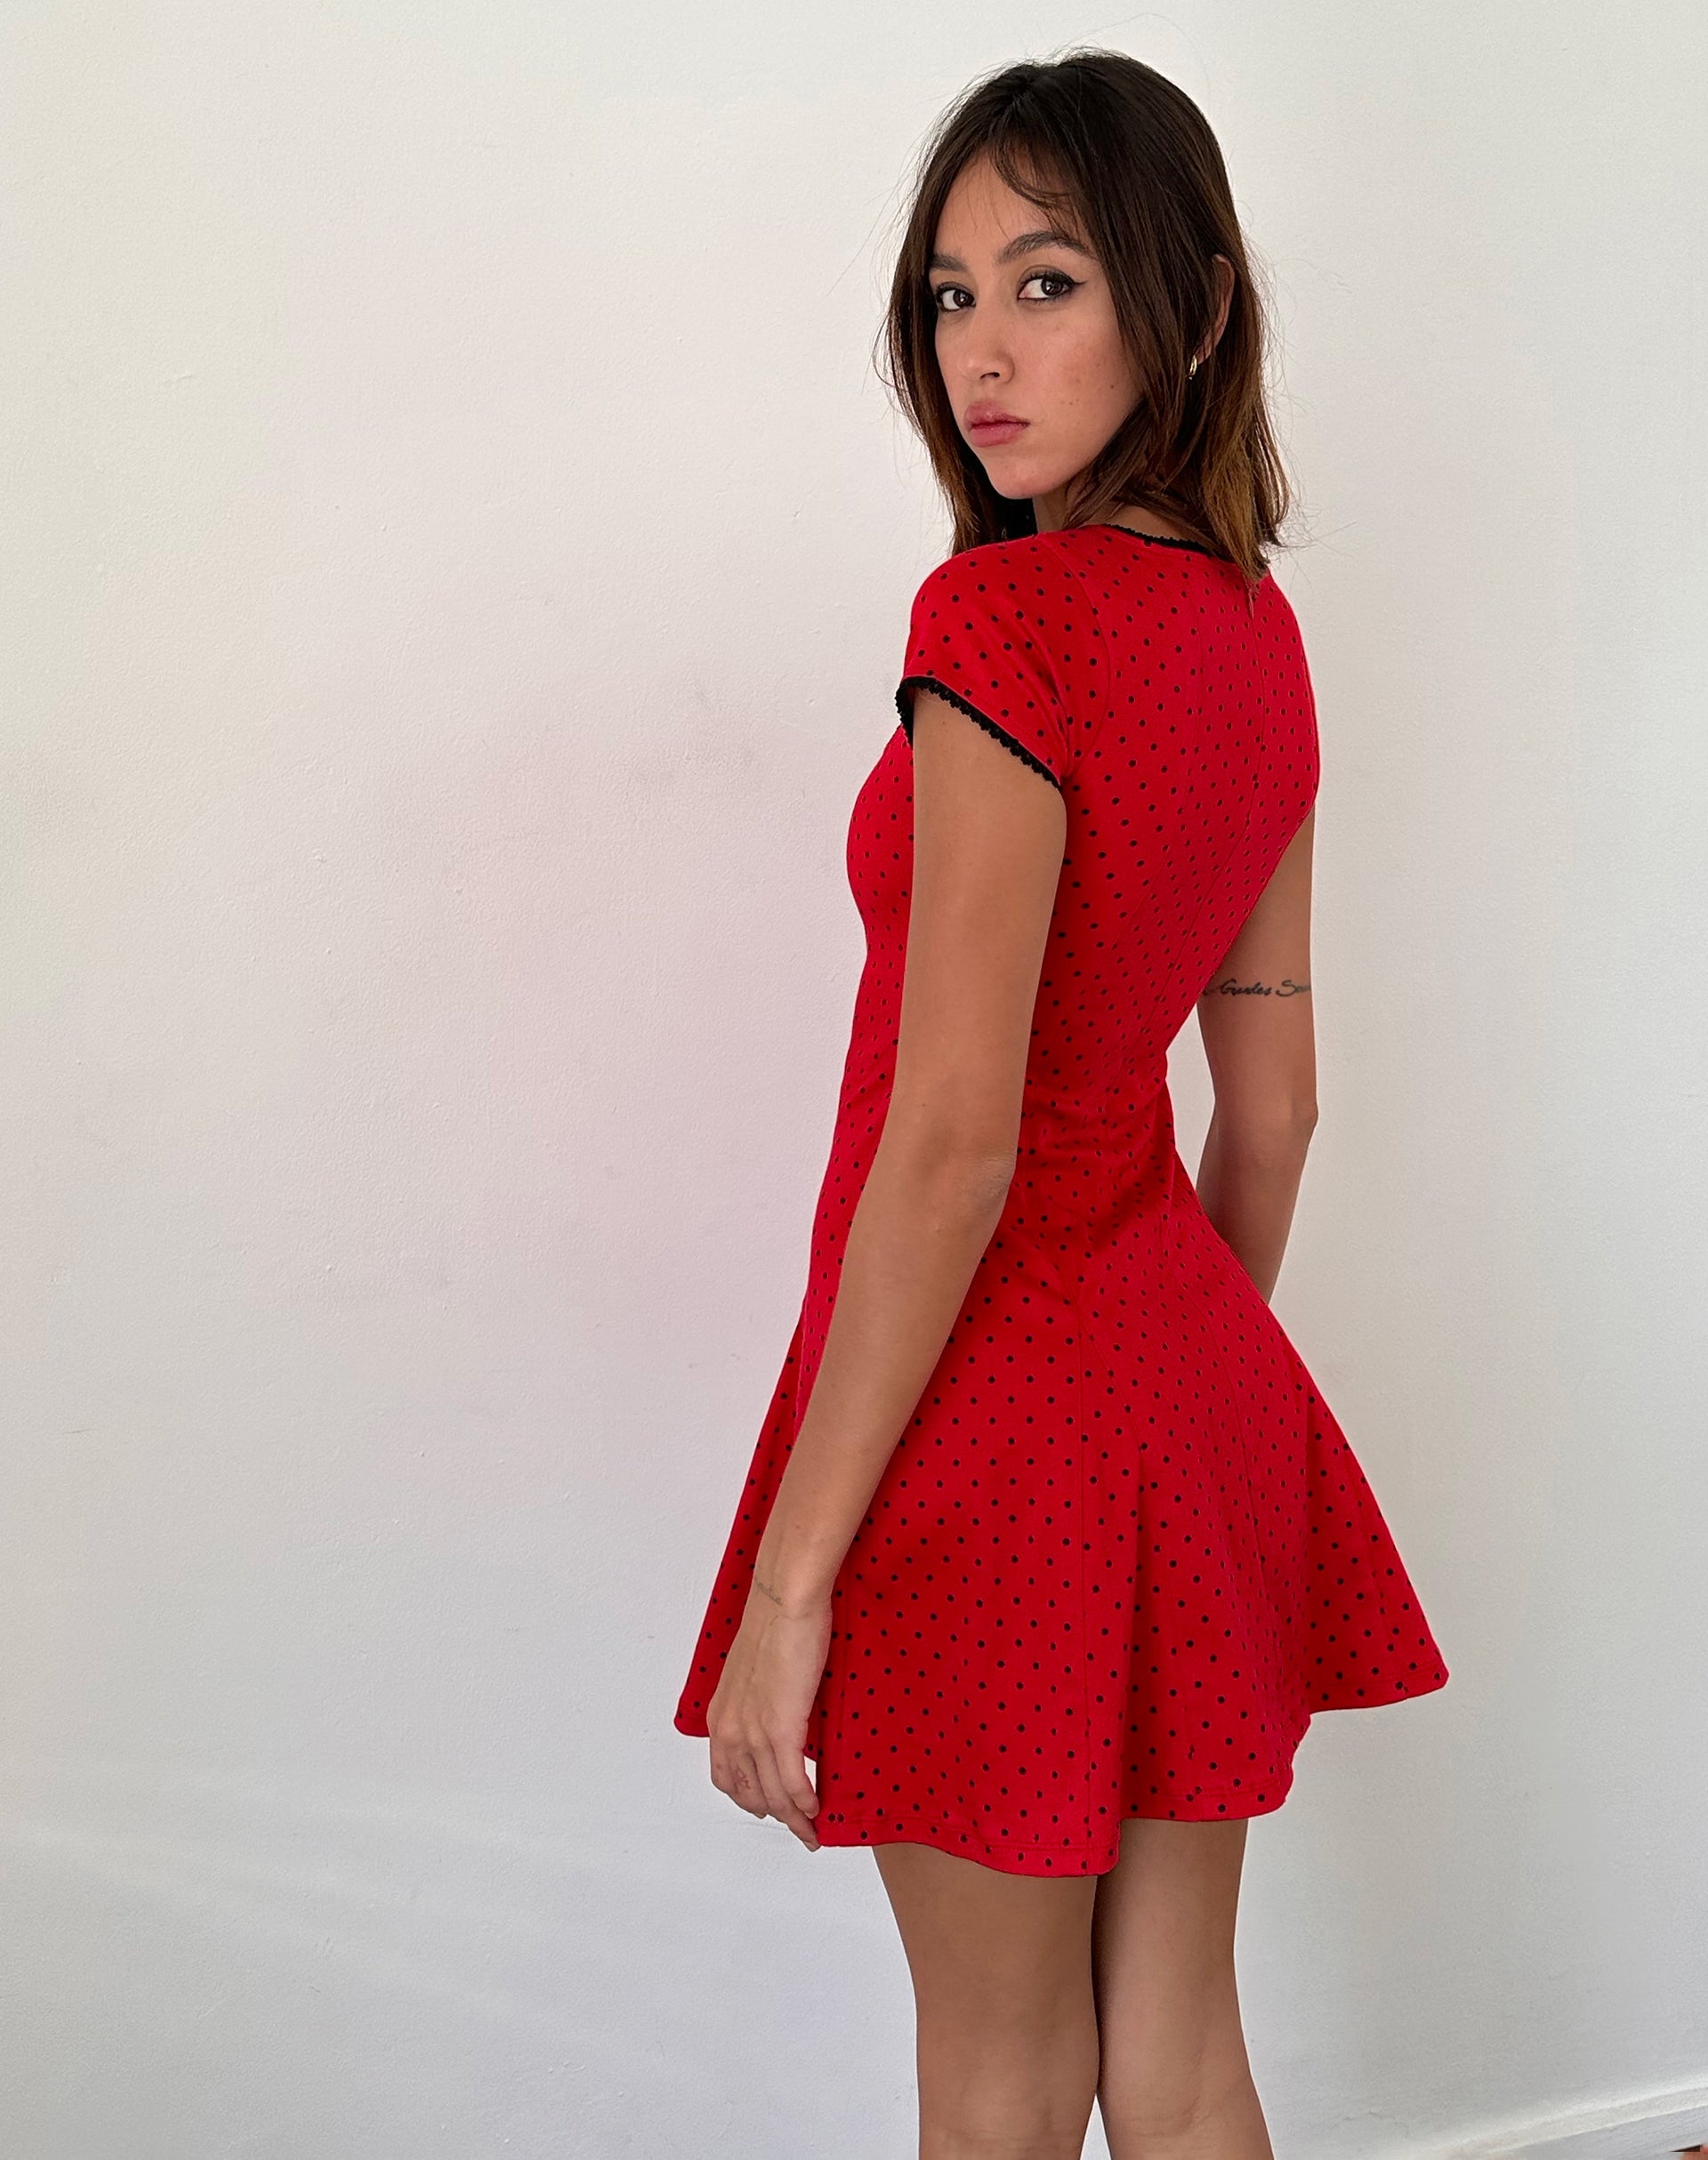 Image of Jinae Pleat Detail Mini Dress in Red Polka Sateen